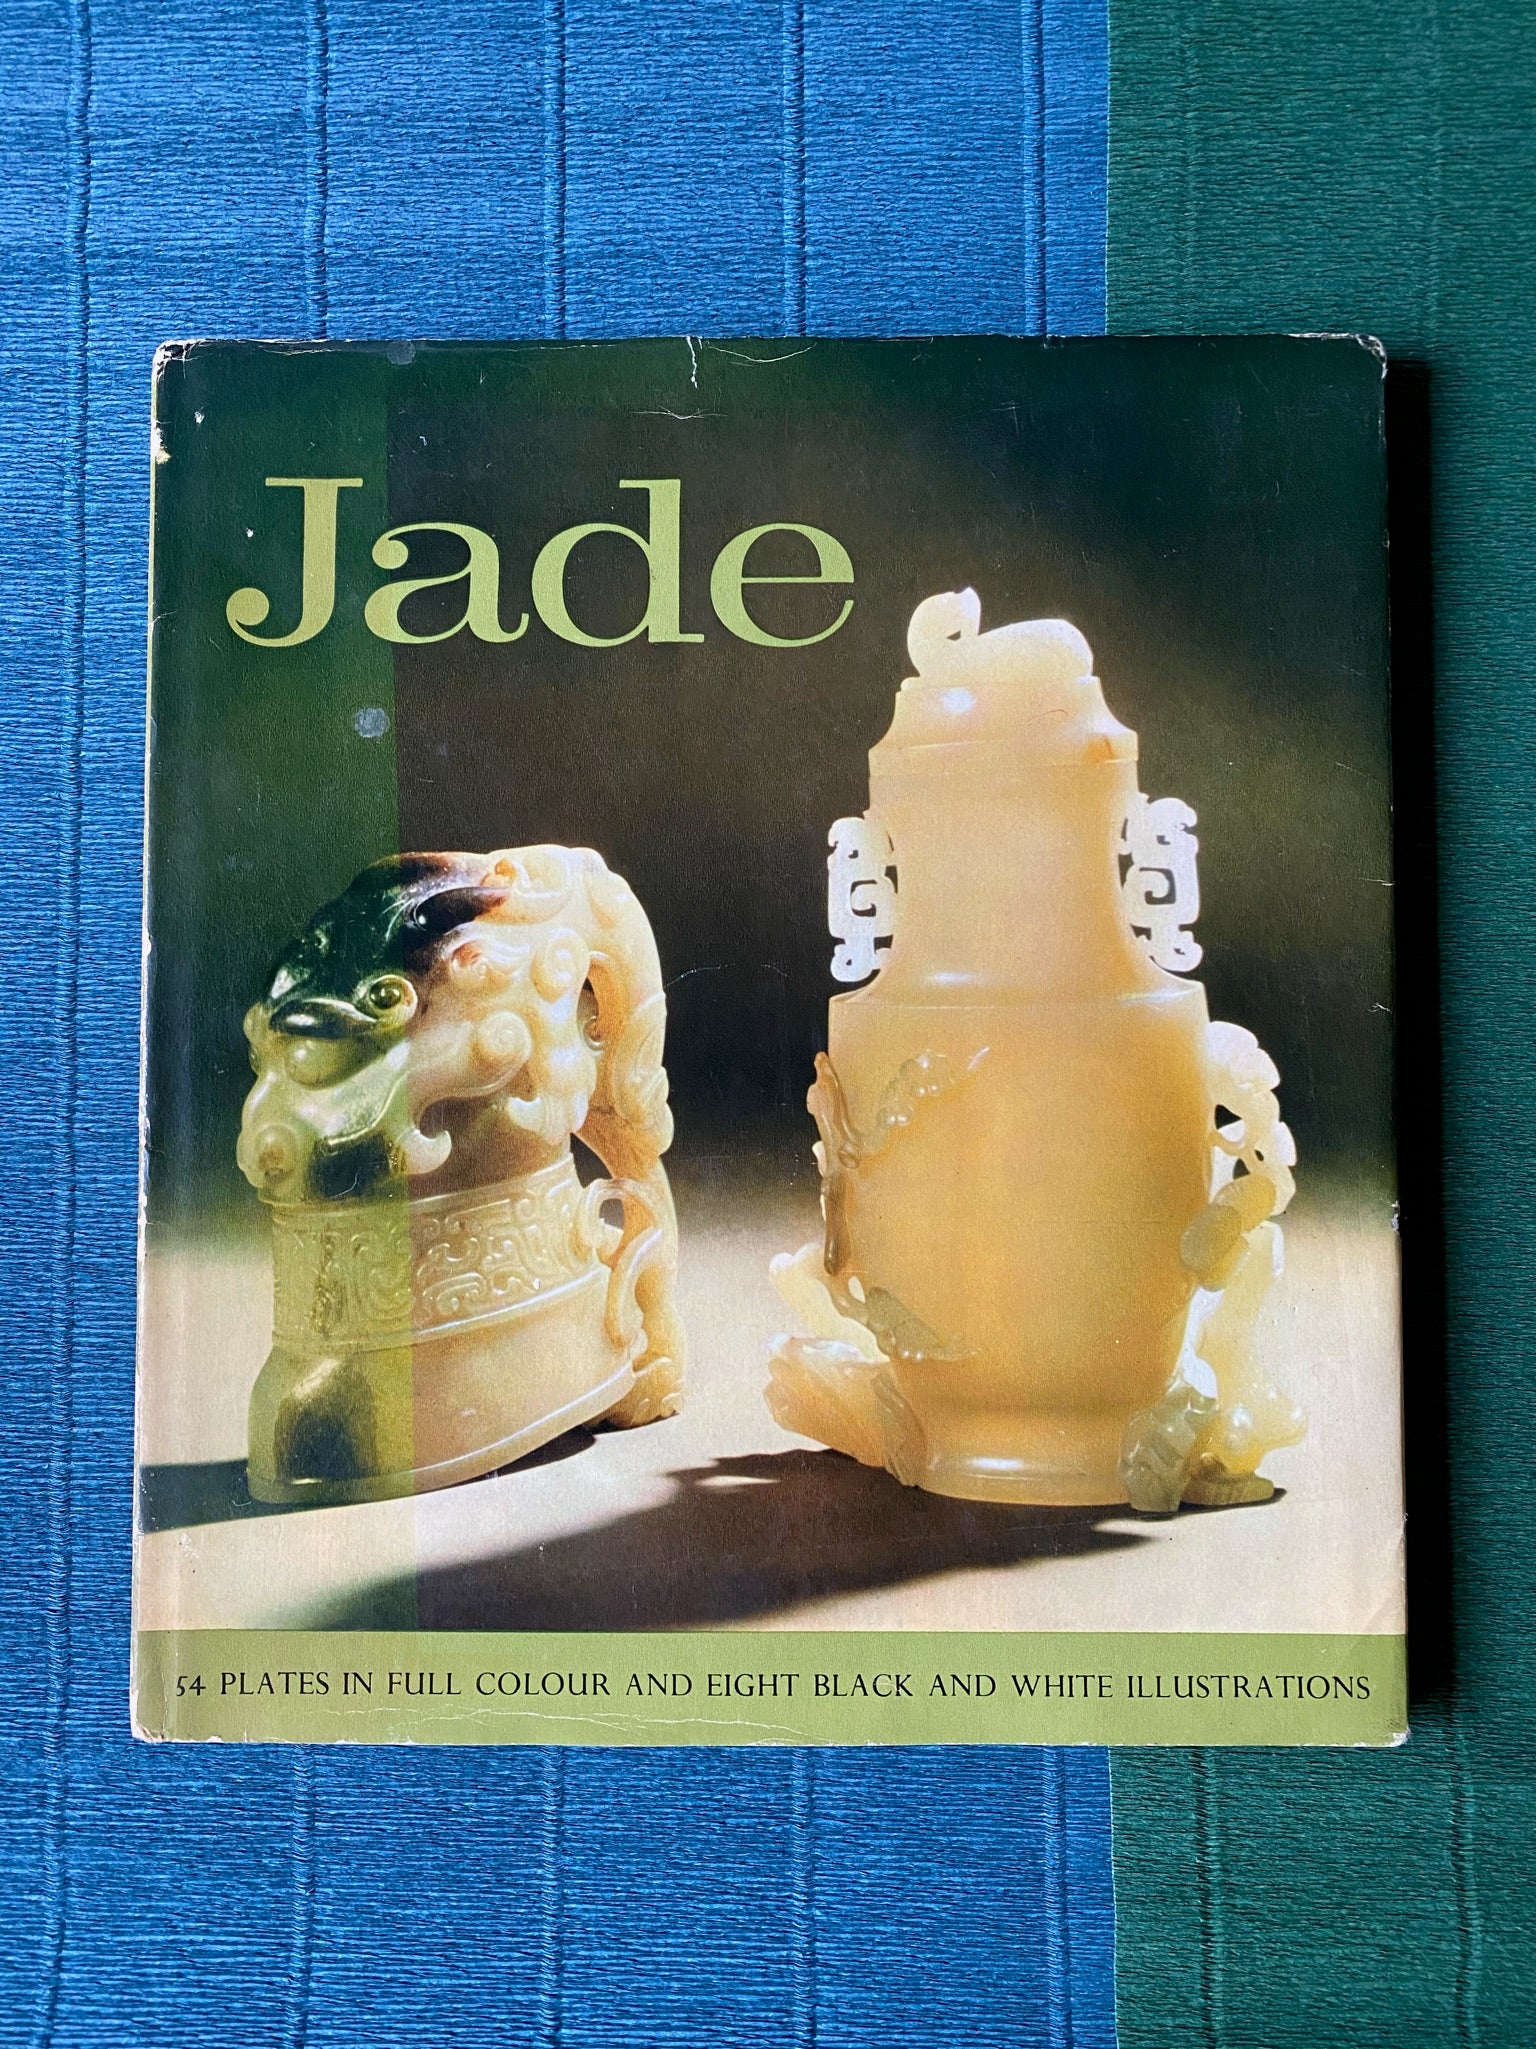 Jade Spring Art Book by J. P. Palmer